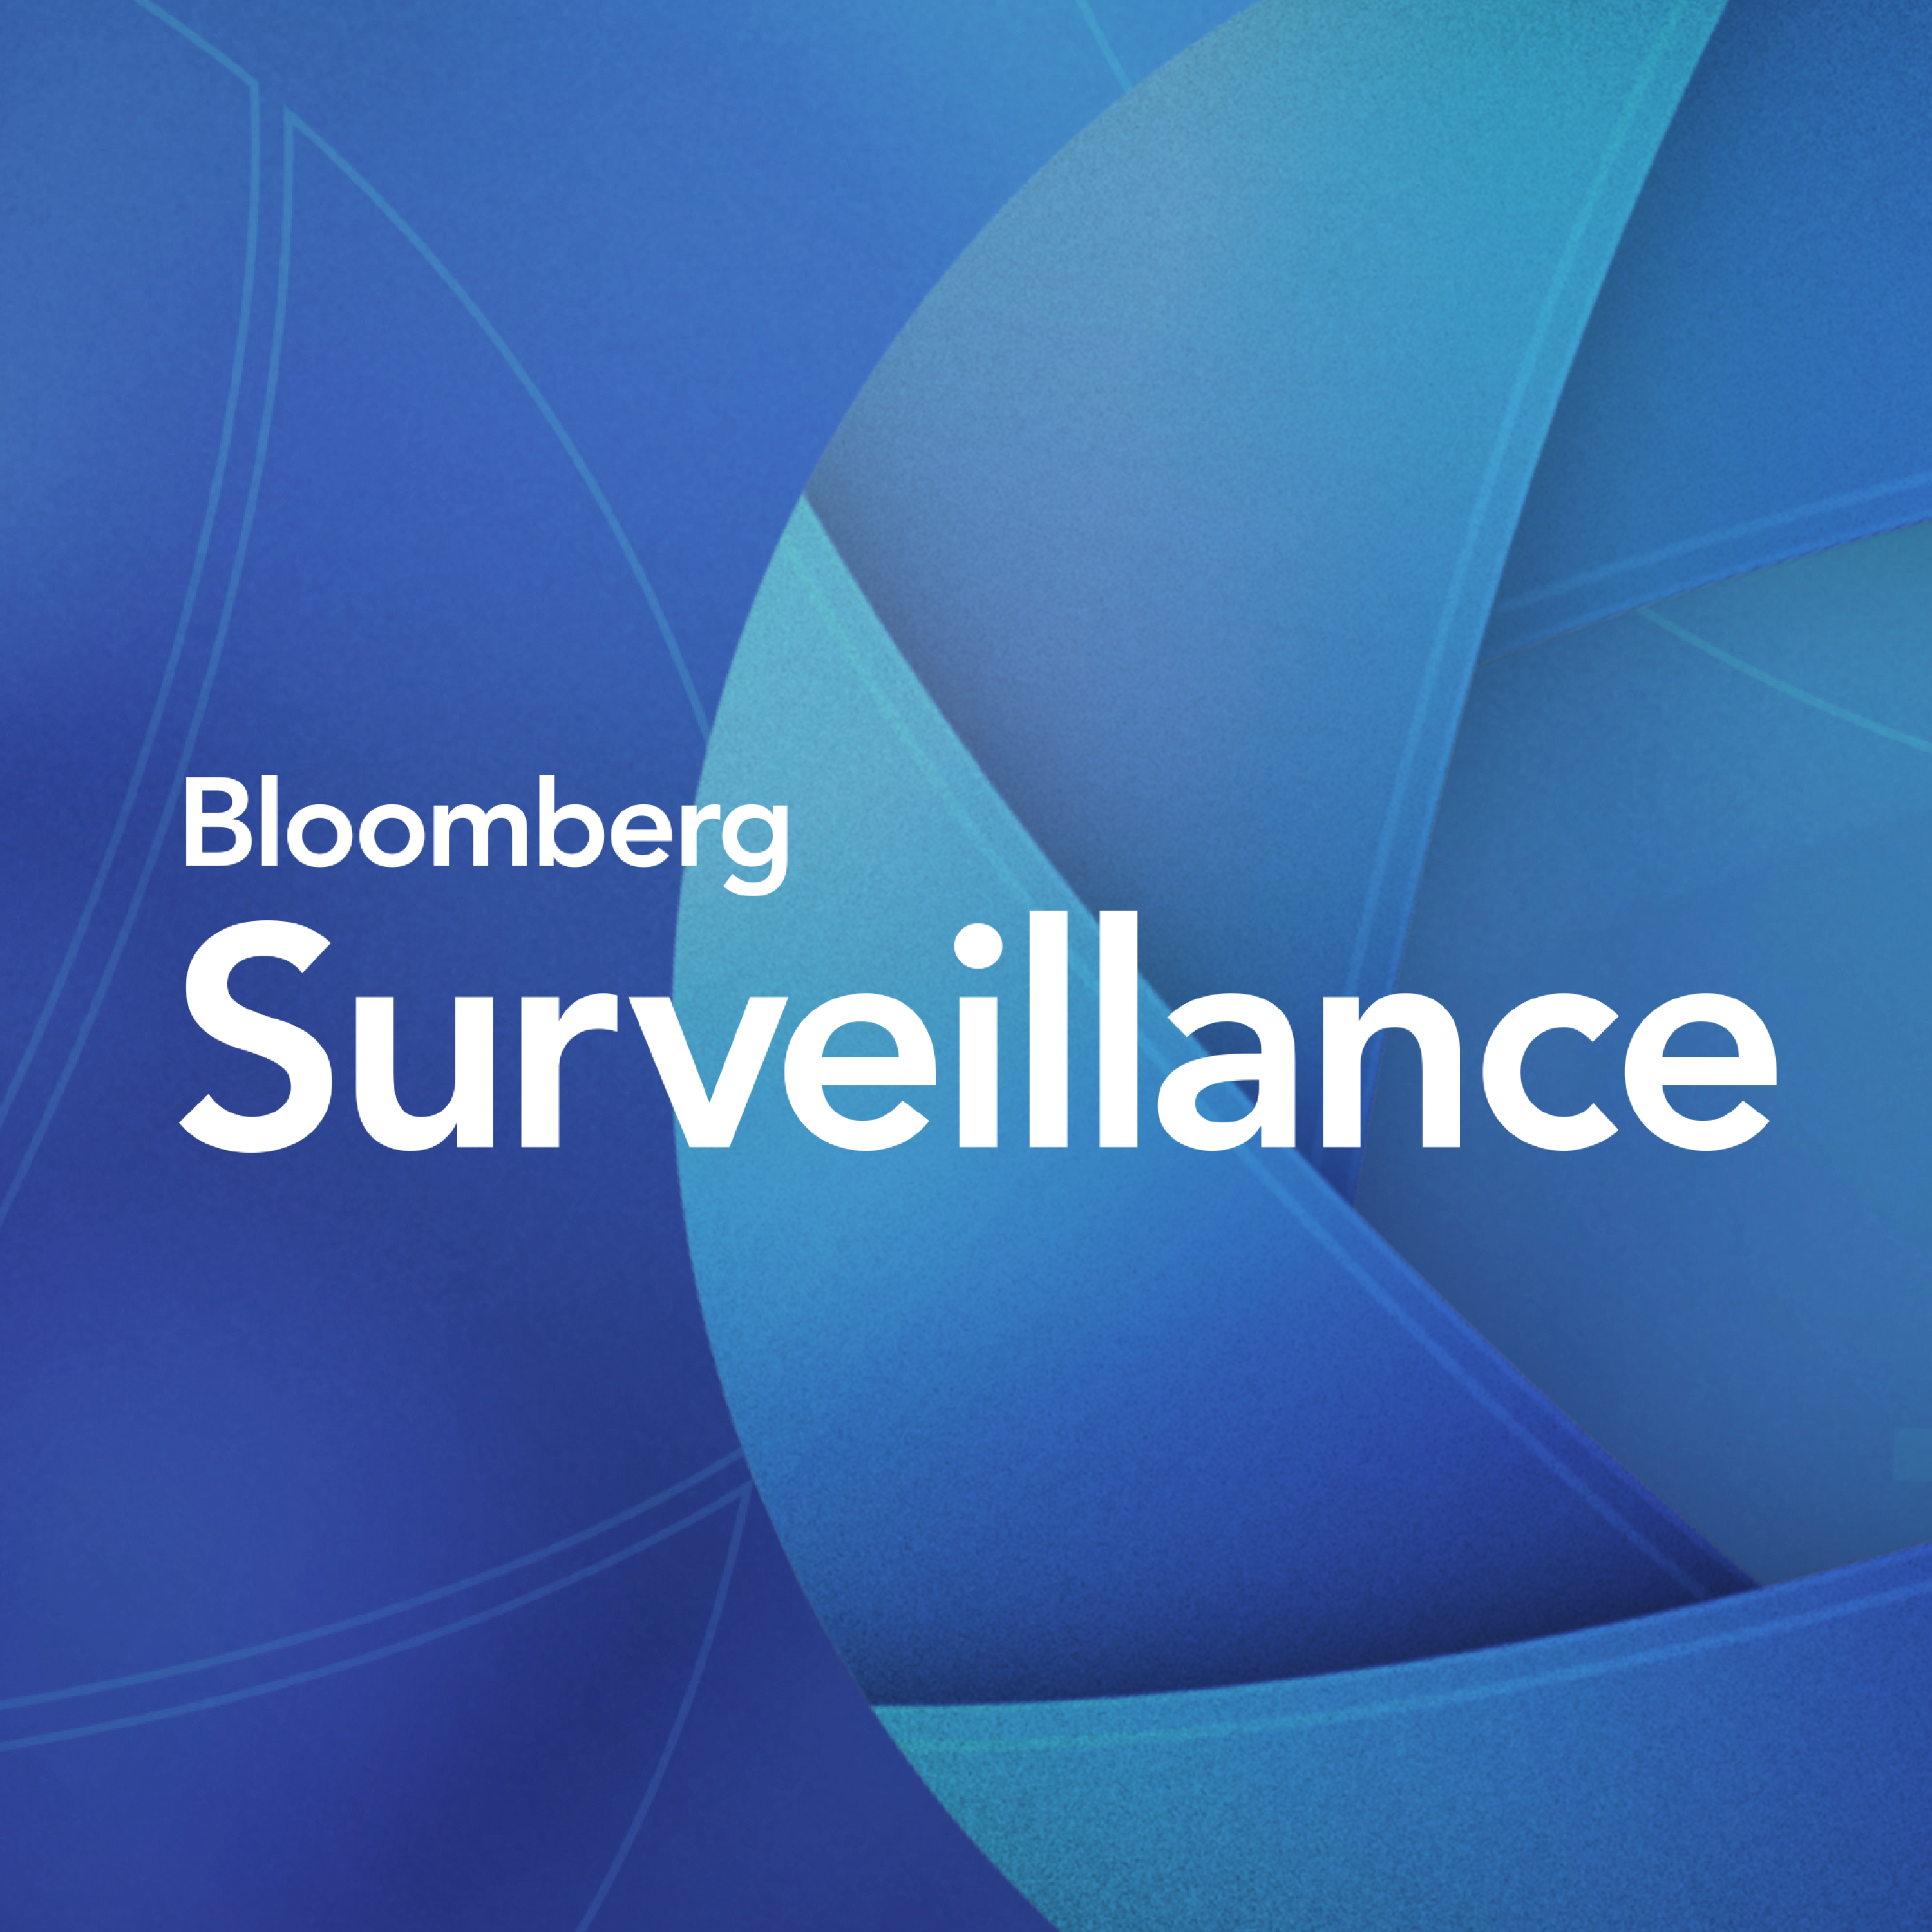 Surveillance: Tech is Tricky, says Kaiser